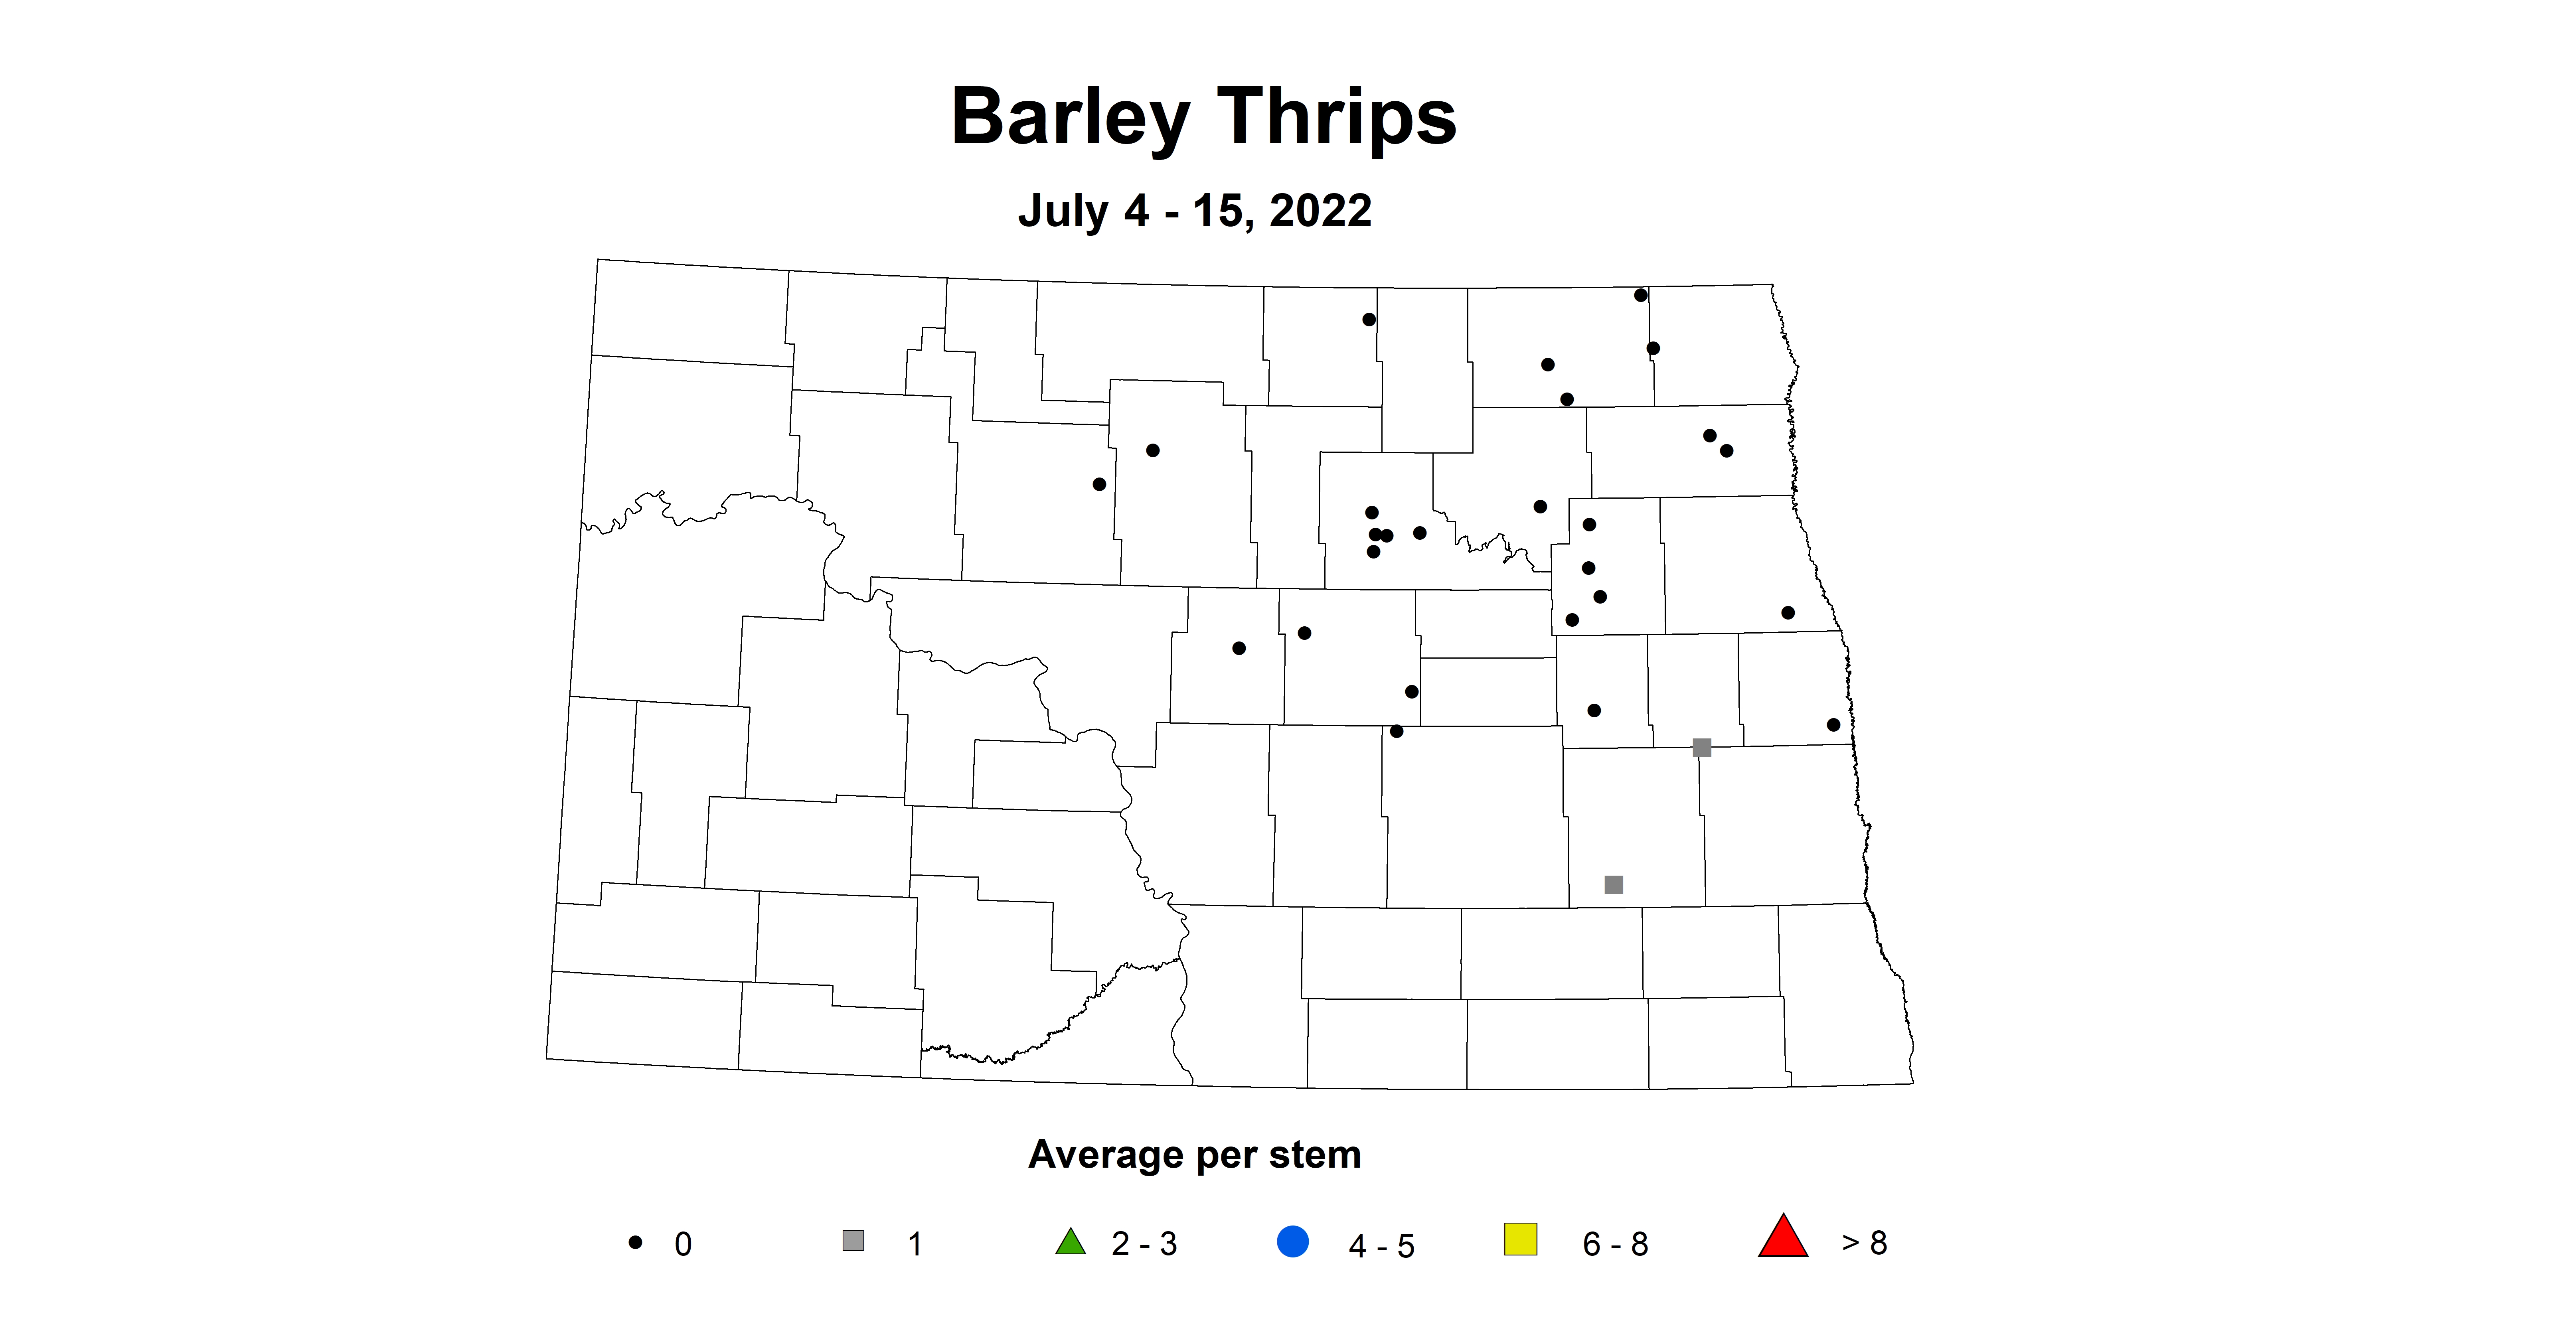 barley thrips 2022 7.4-7.15